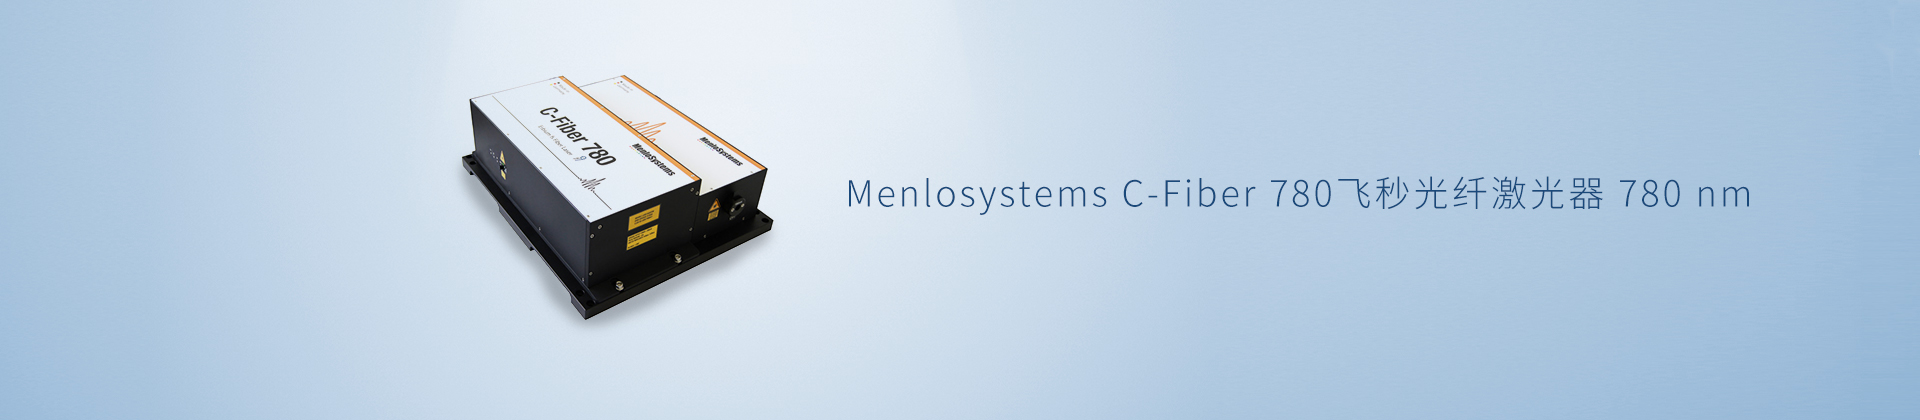 Menlosystems C-Fiber 780飞秒光纤激光器 780 nm